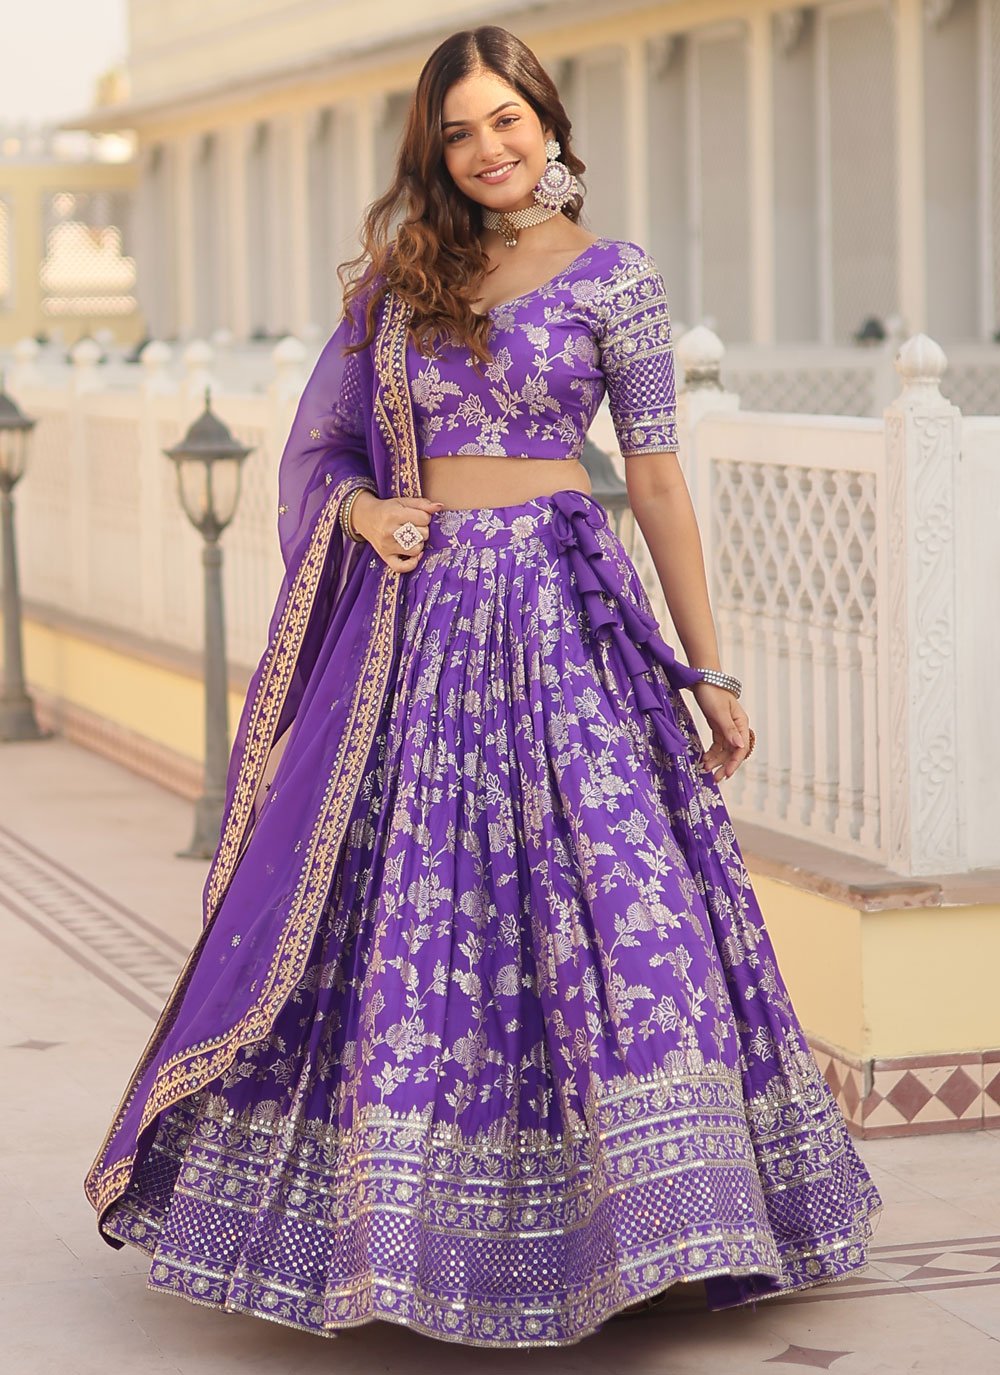 Bridal Sequins Work Lehenga Choli Indian Lengha Chunri Wedding Dress Sari  Saree | eBay